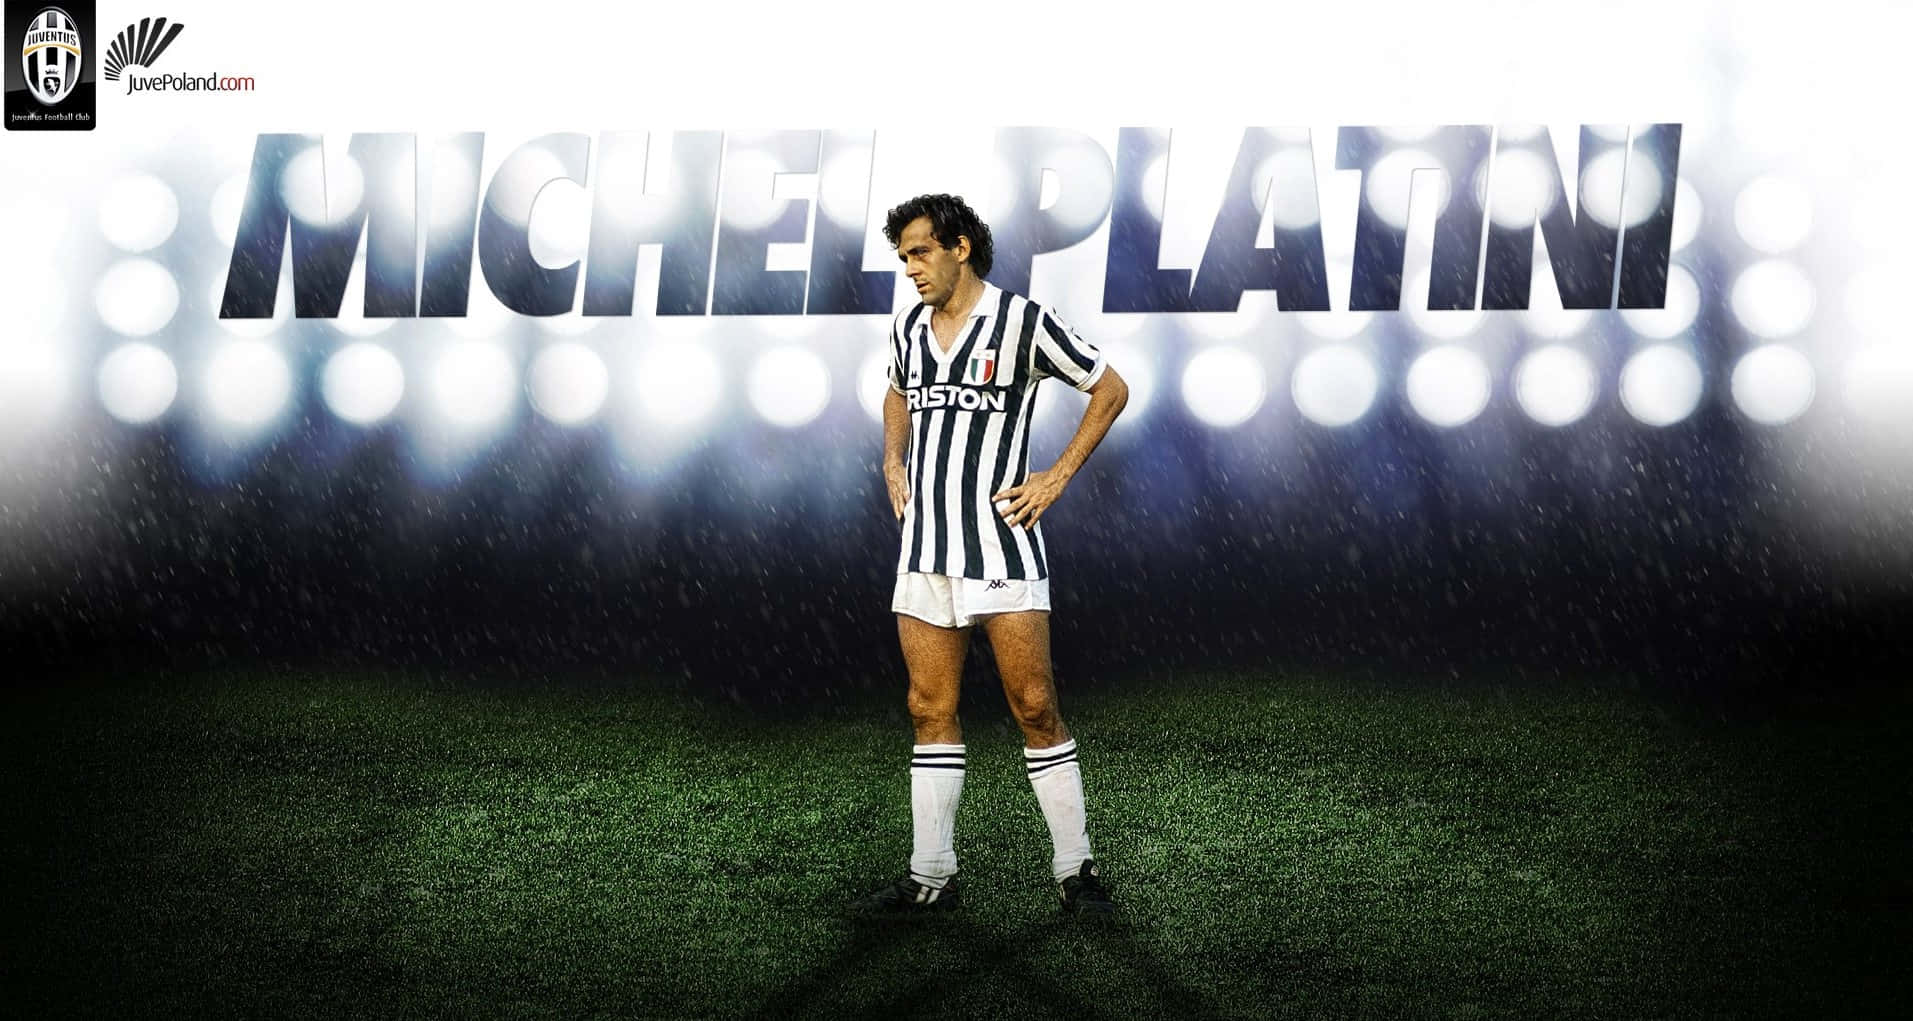 Michel Platini Fodboldspiller Legende Fotografering Wallpaper